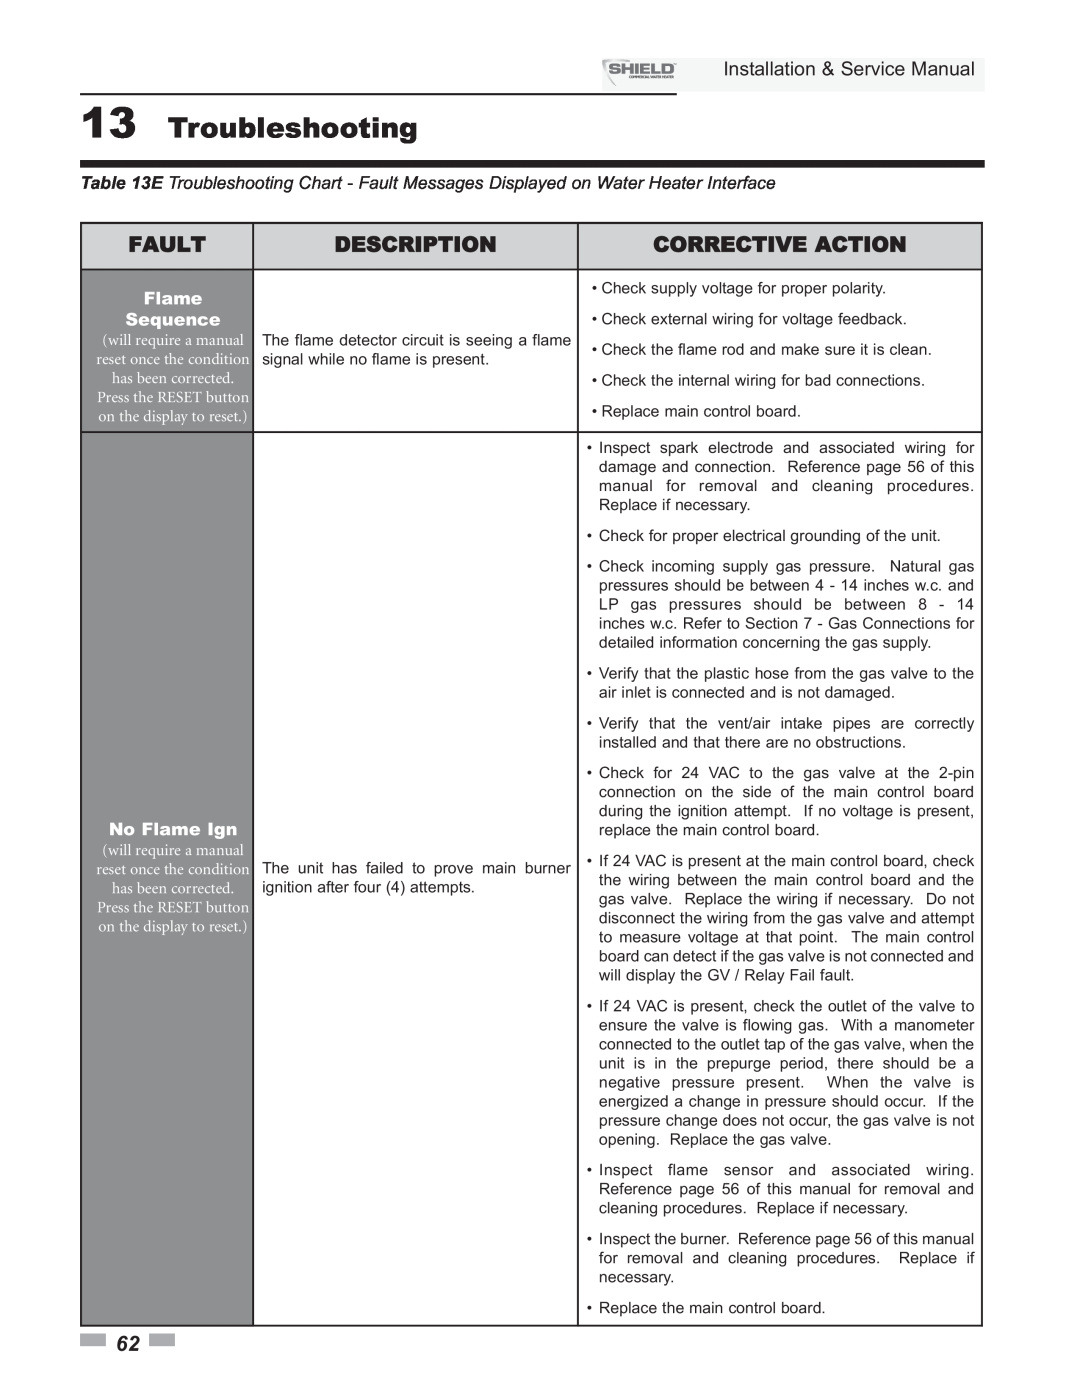 Lochinvar SNA285-125 Description, Troubleshooting, Fault, Corrective Action, Installation & Service Manual, Flame 